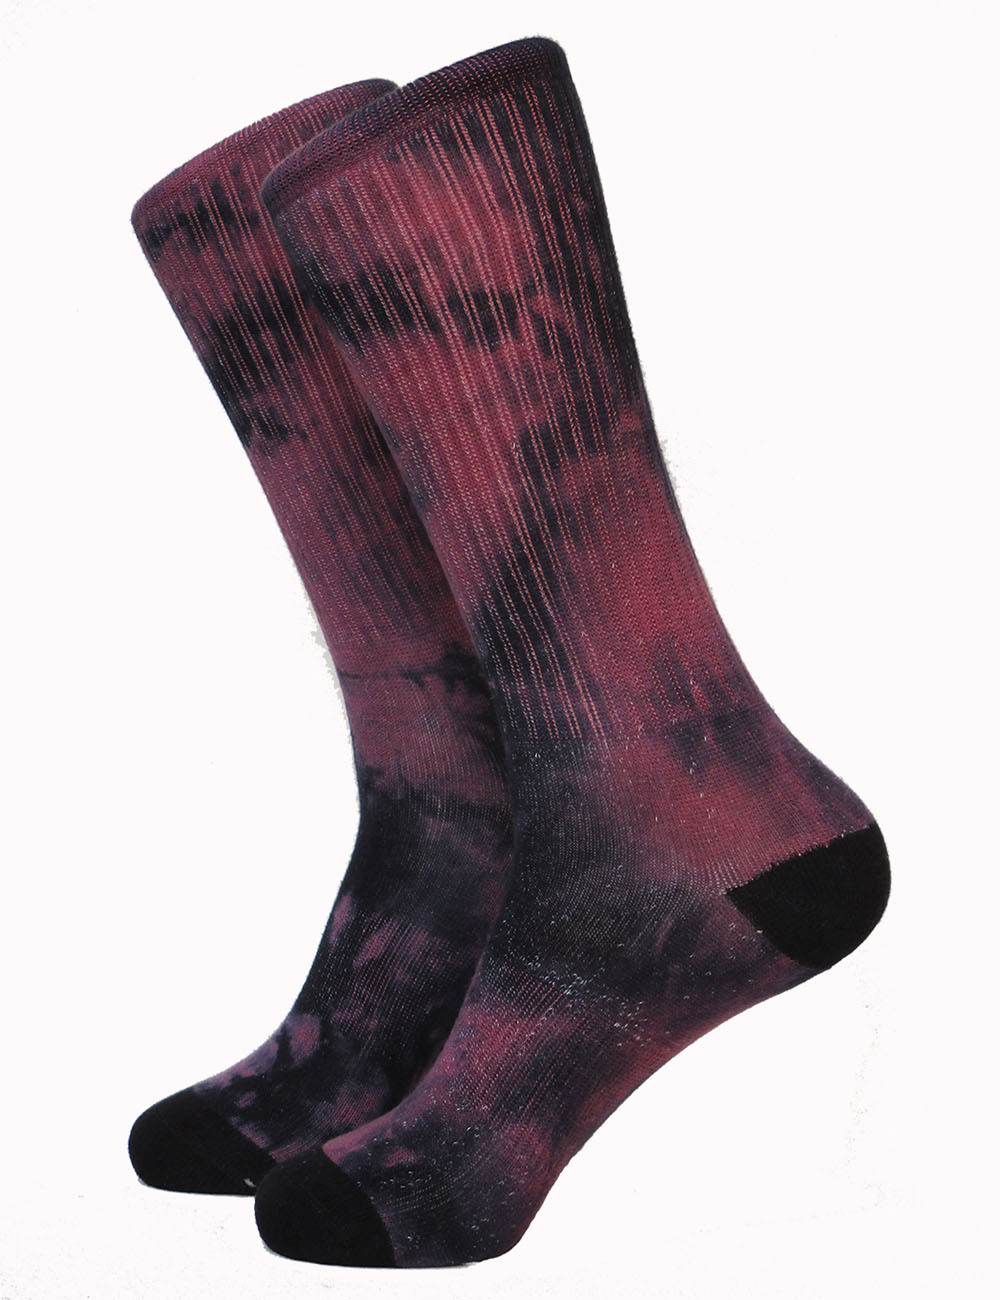 USA brand skate socks high quality compression terry knee sport socks summer style Basketball men brand